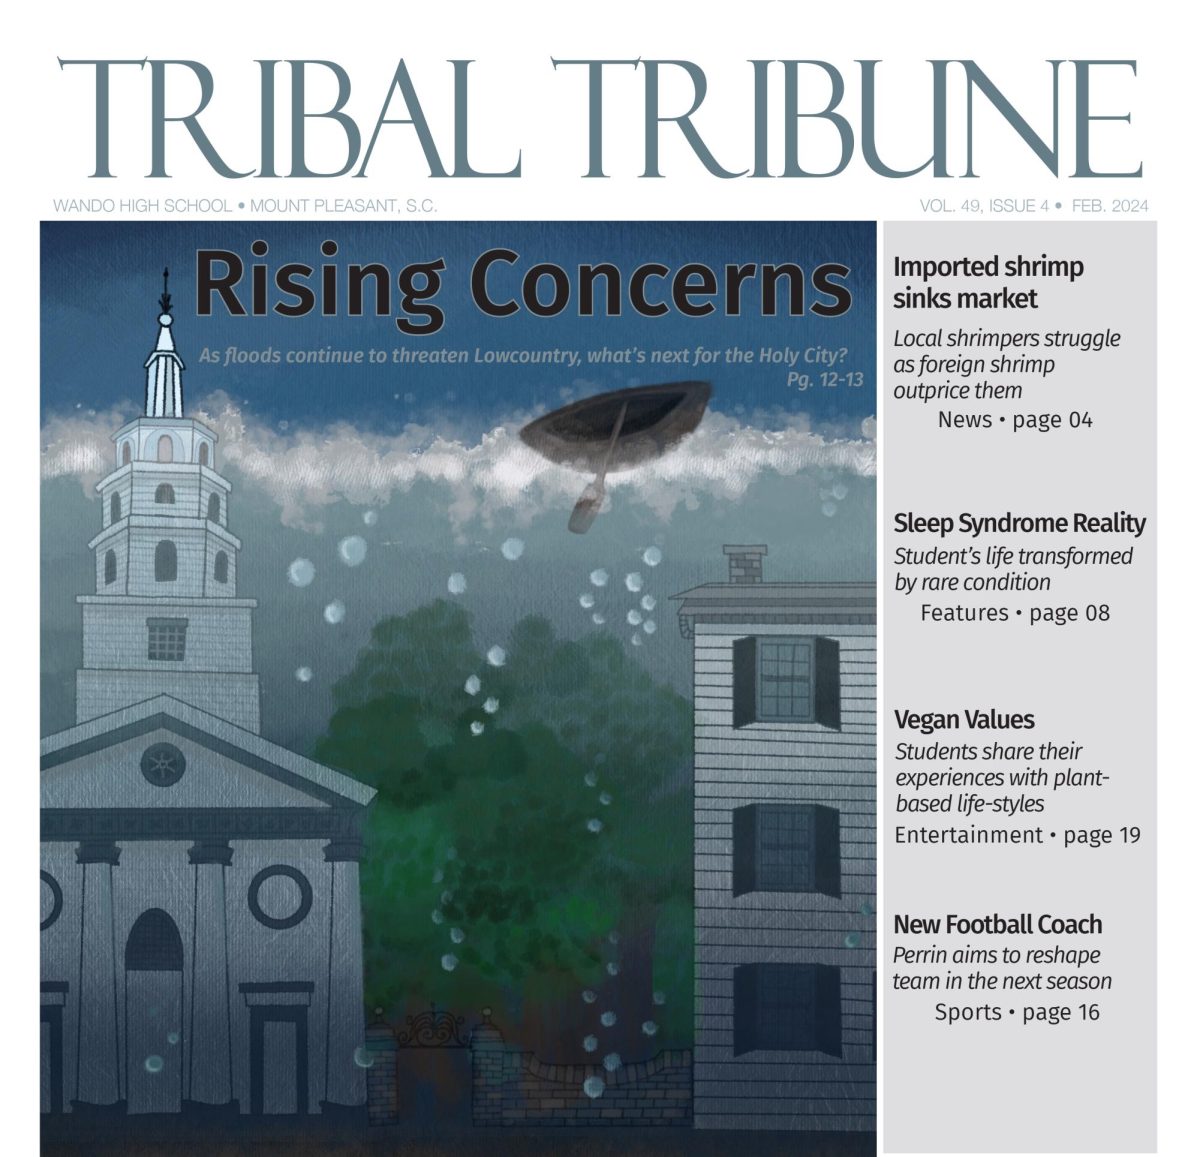 Tribal Tribune Volume 49 Issue 4